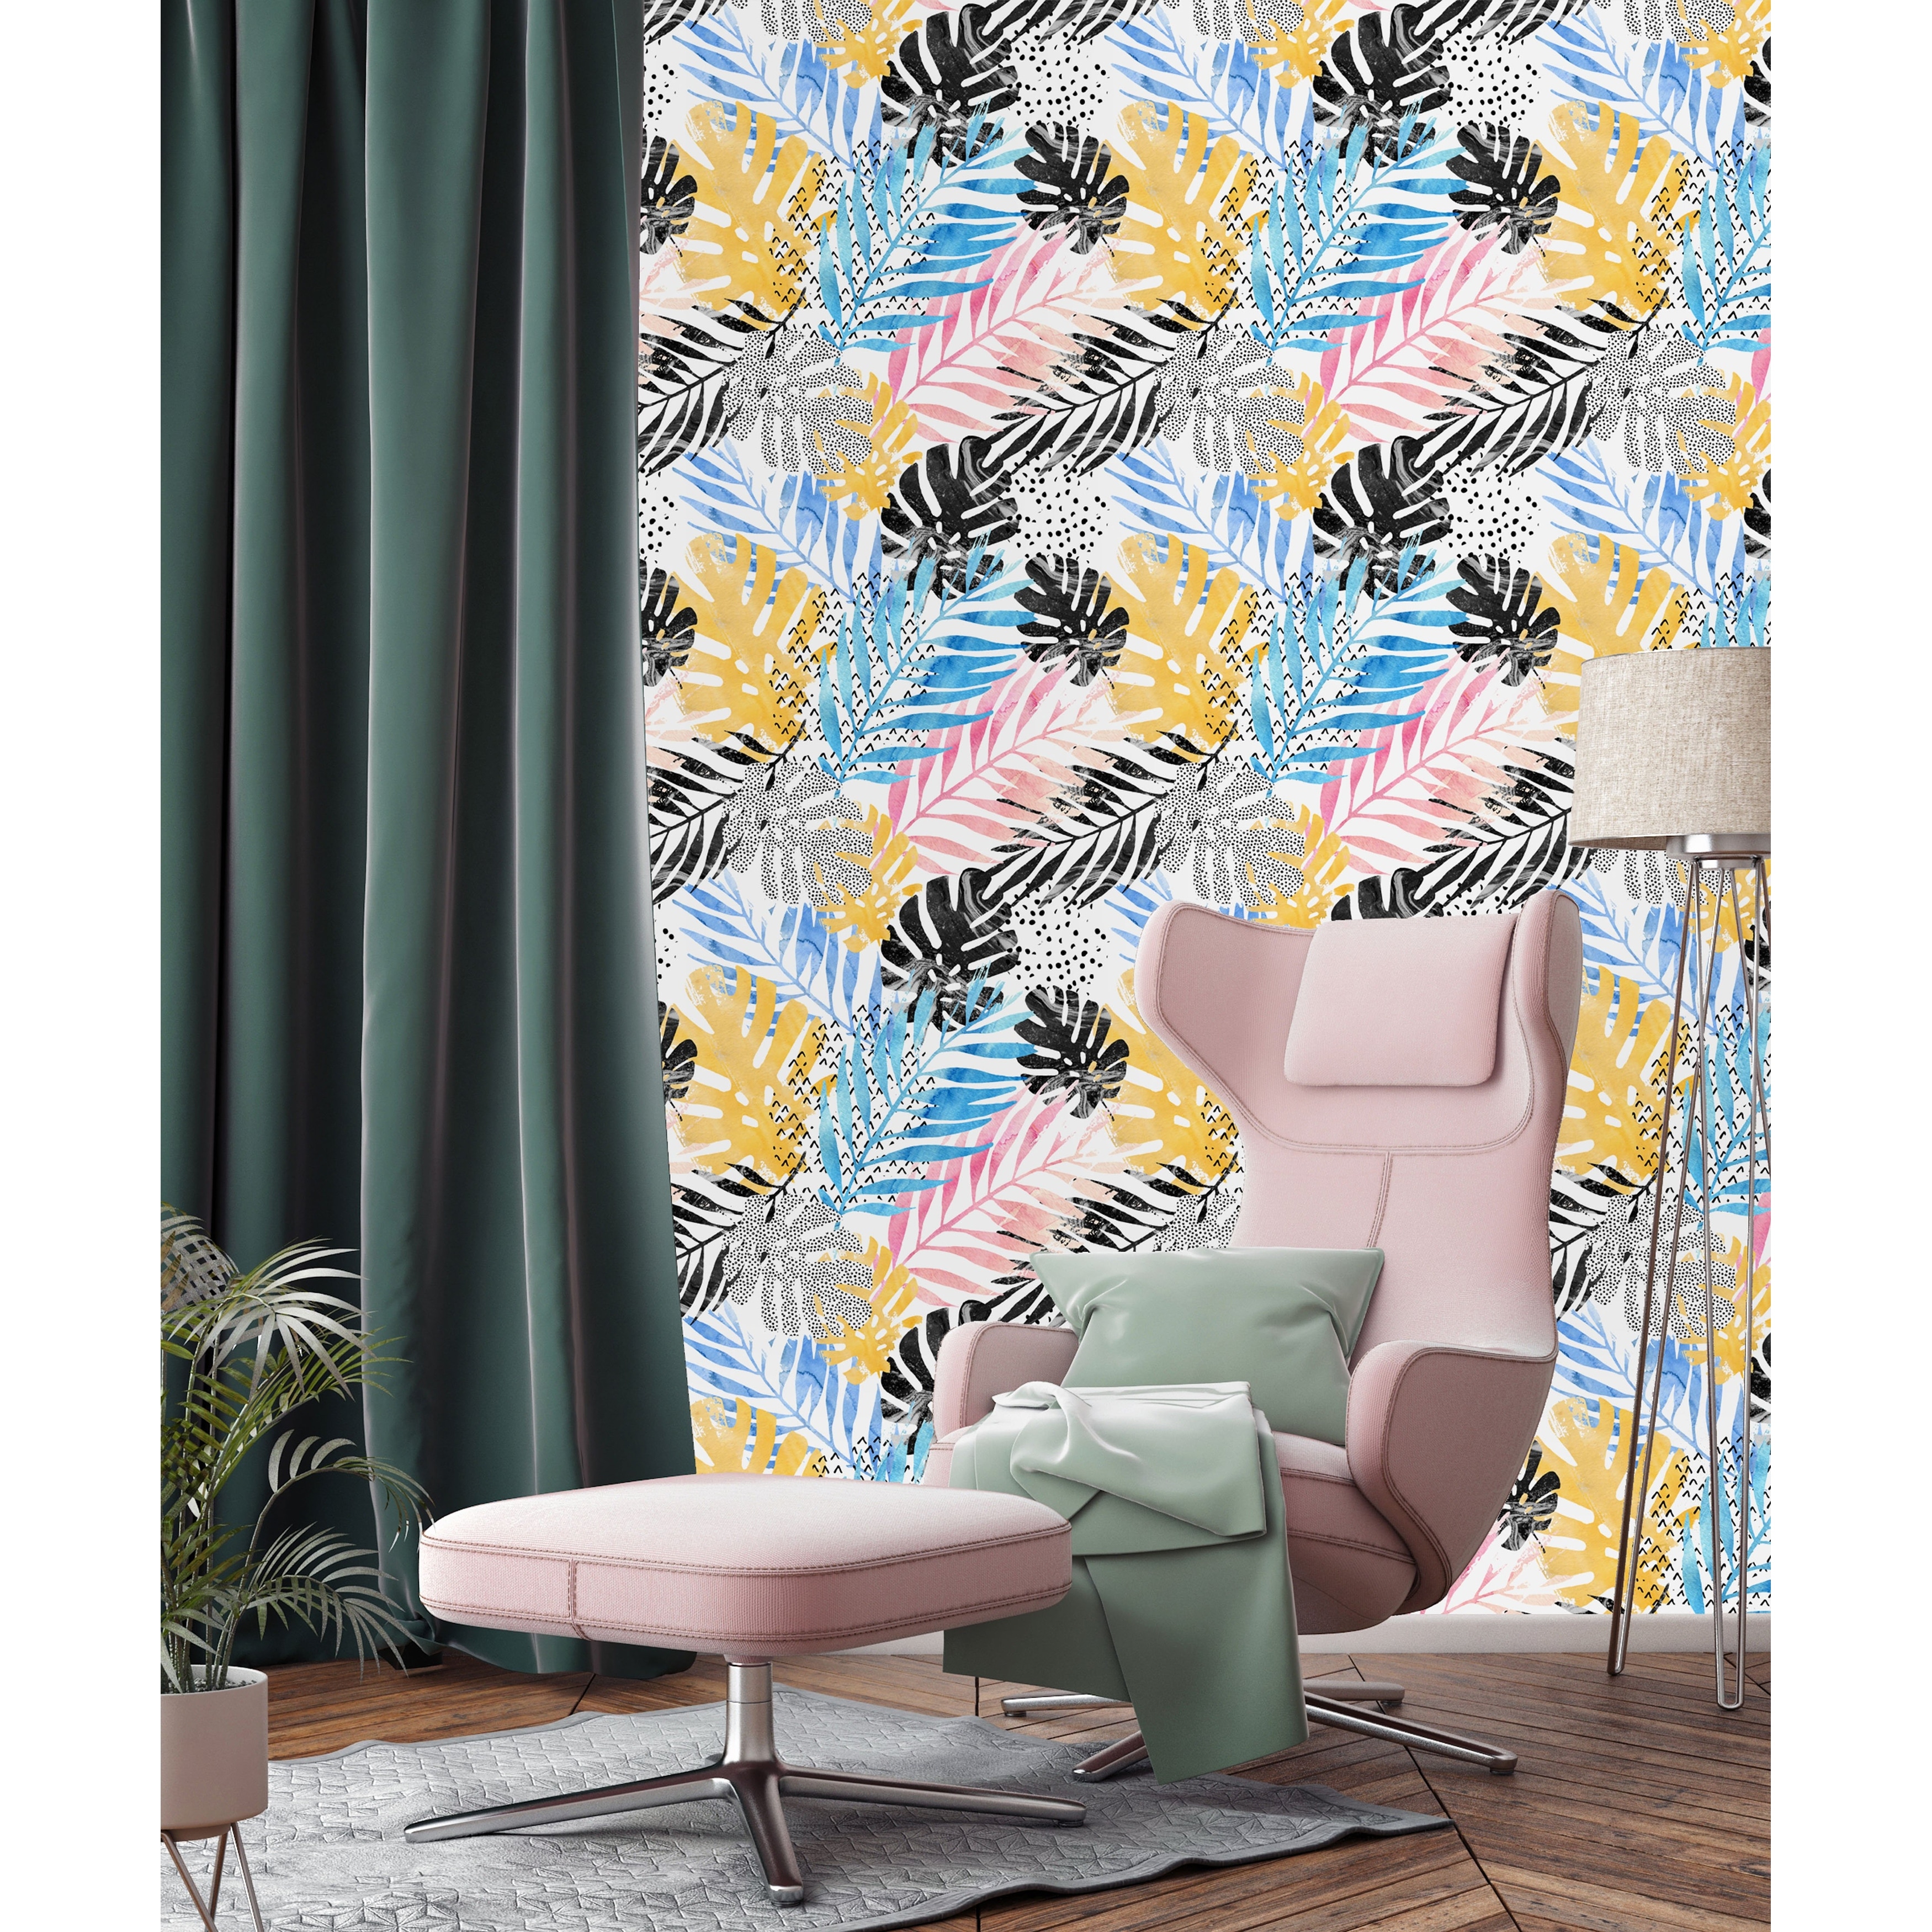 Mercer41 Binne Peel  Stick Floral Wallpaper  Reviews  Wayfair